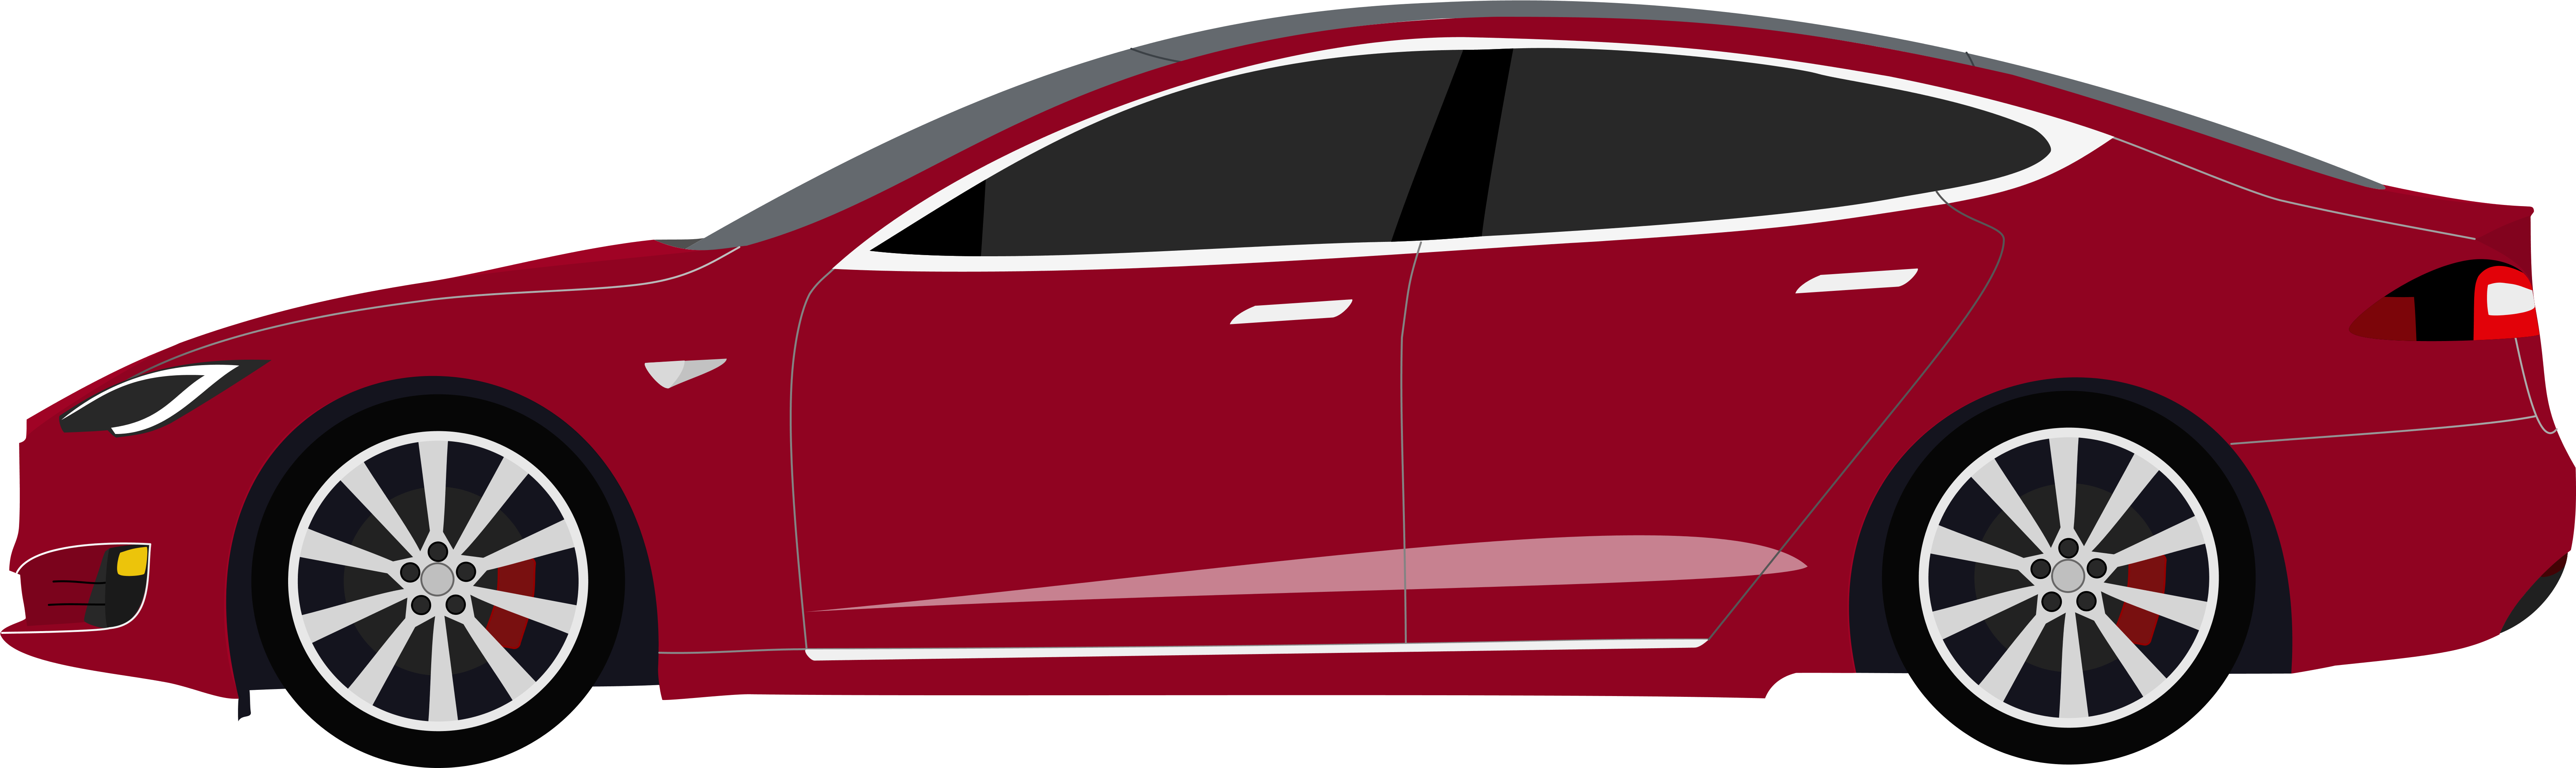 Kırmızı Tesla araba PNG Pic